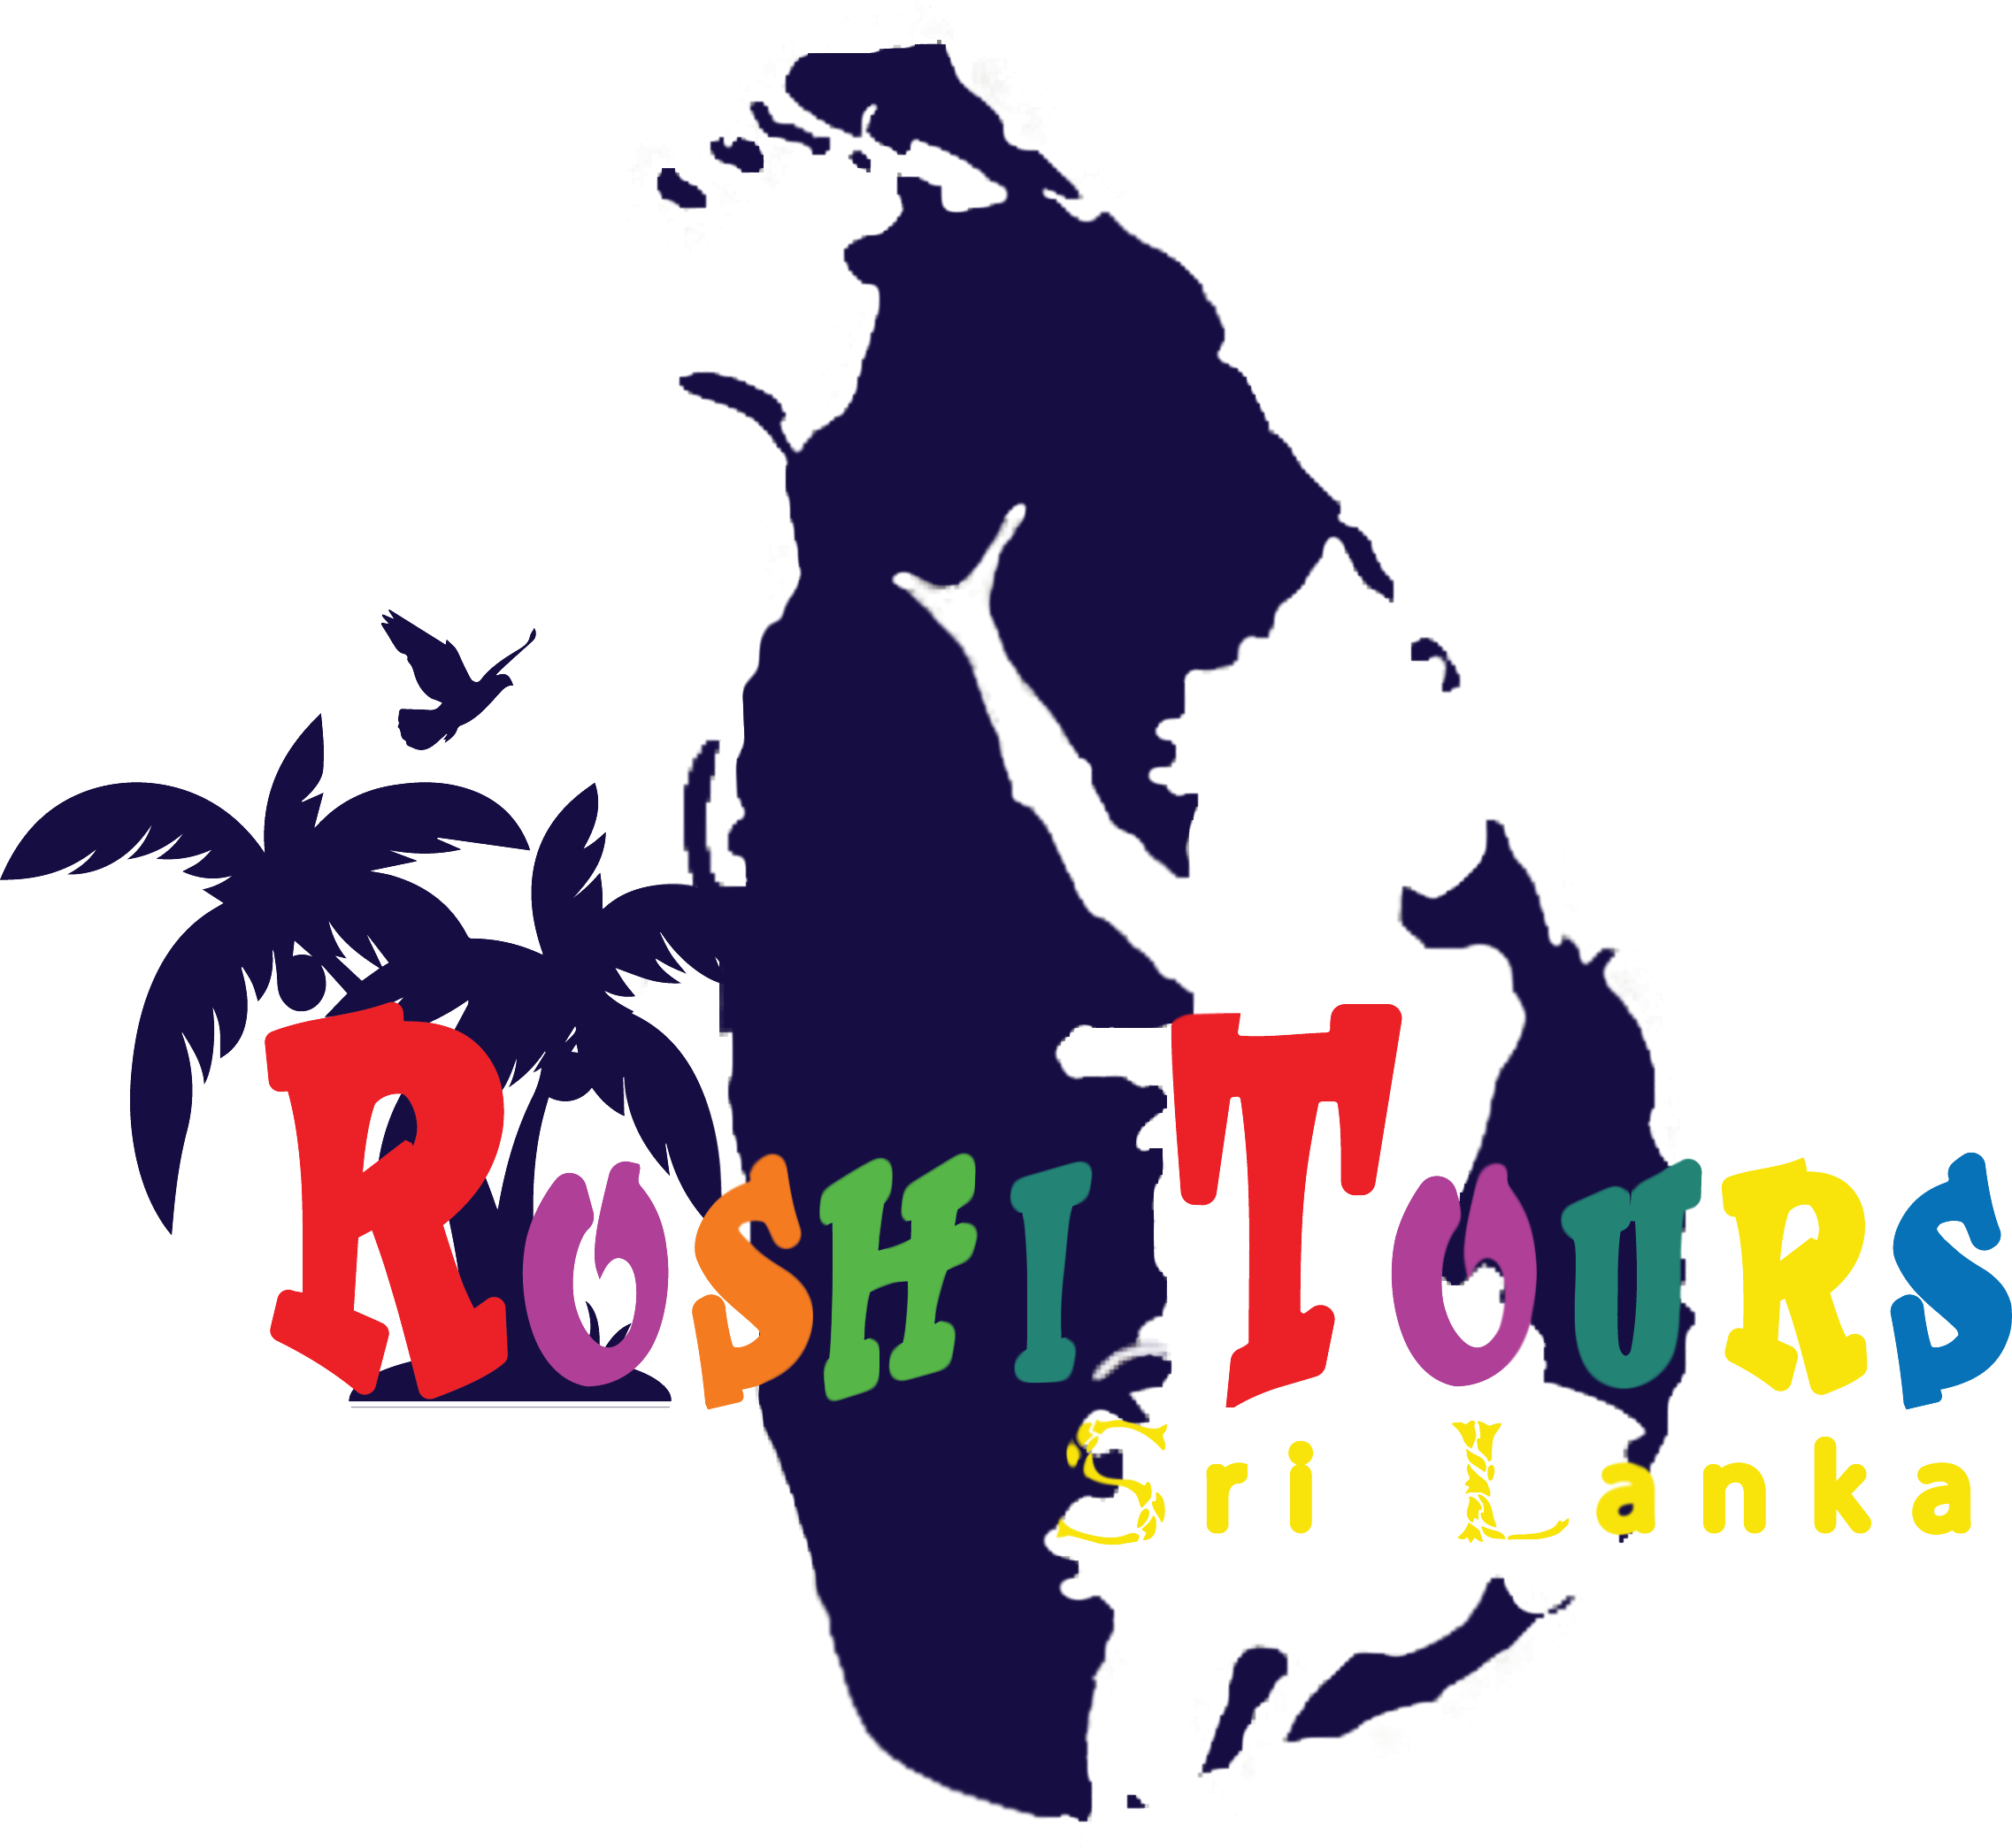 Roshi travels pvt ltd. Traveling clipart tour operator